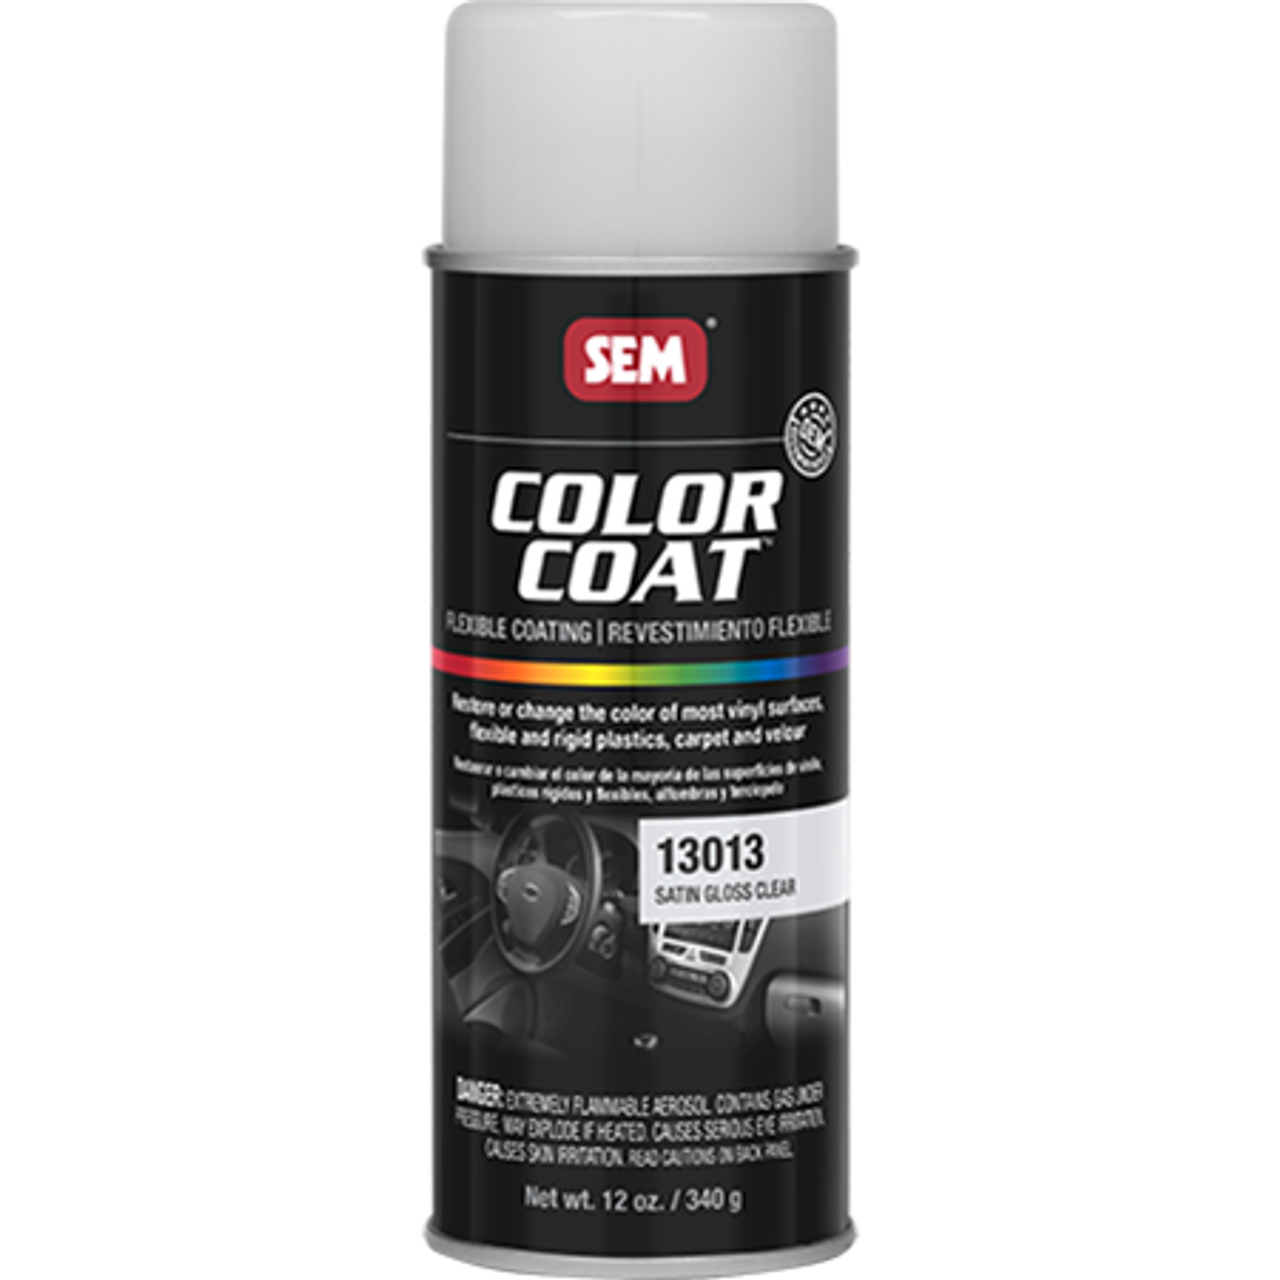 SEM 13013 Satin Gloss Clear Color Coat 16 oz/12 oz Net